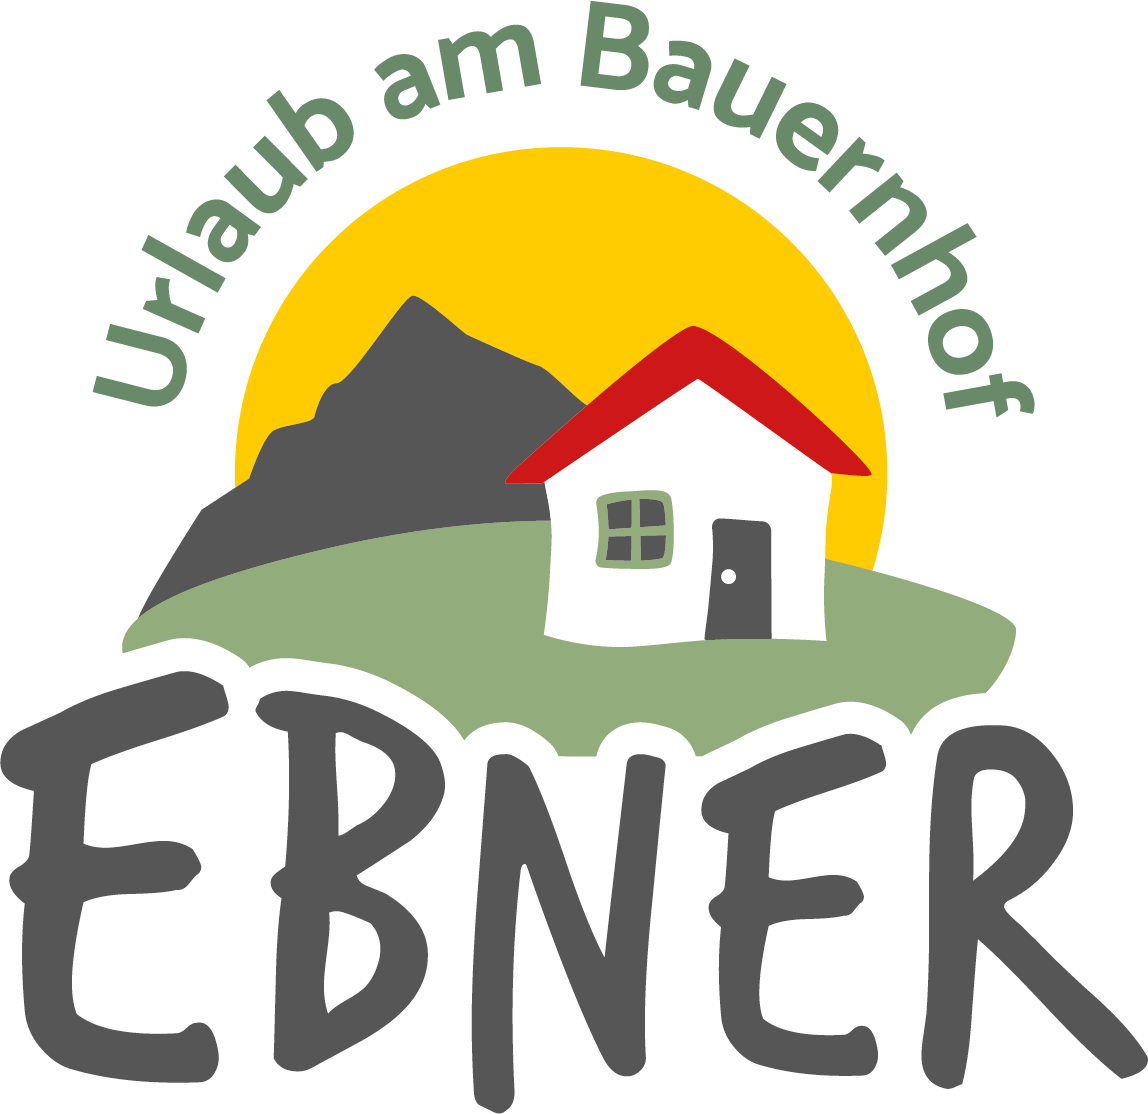 (c) Uab-ebner.at